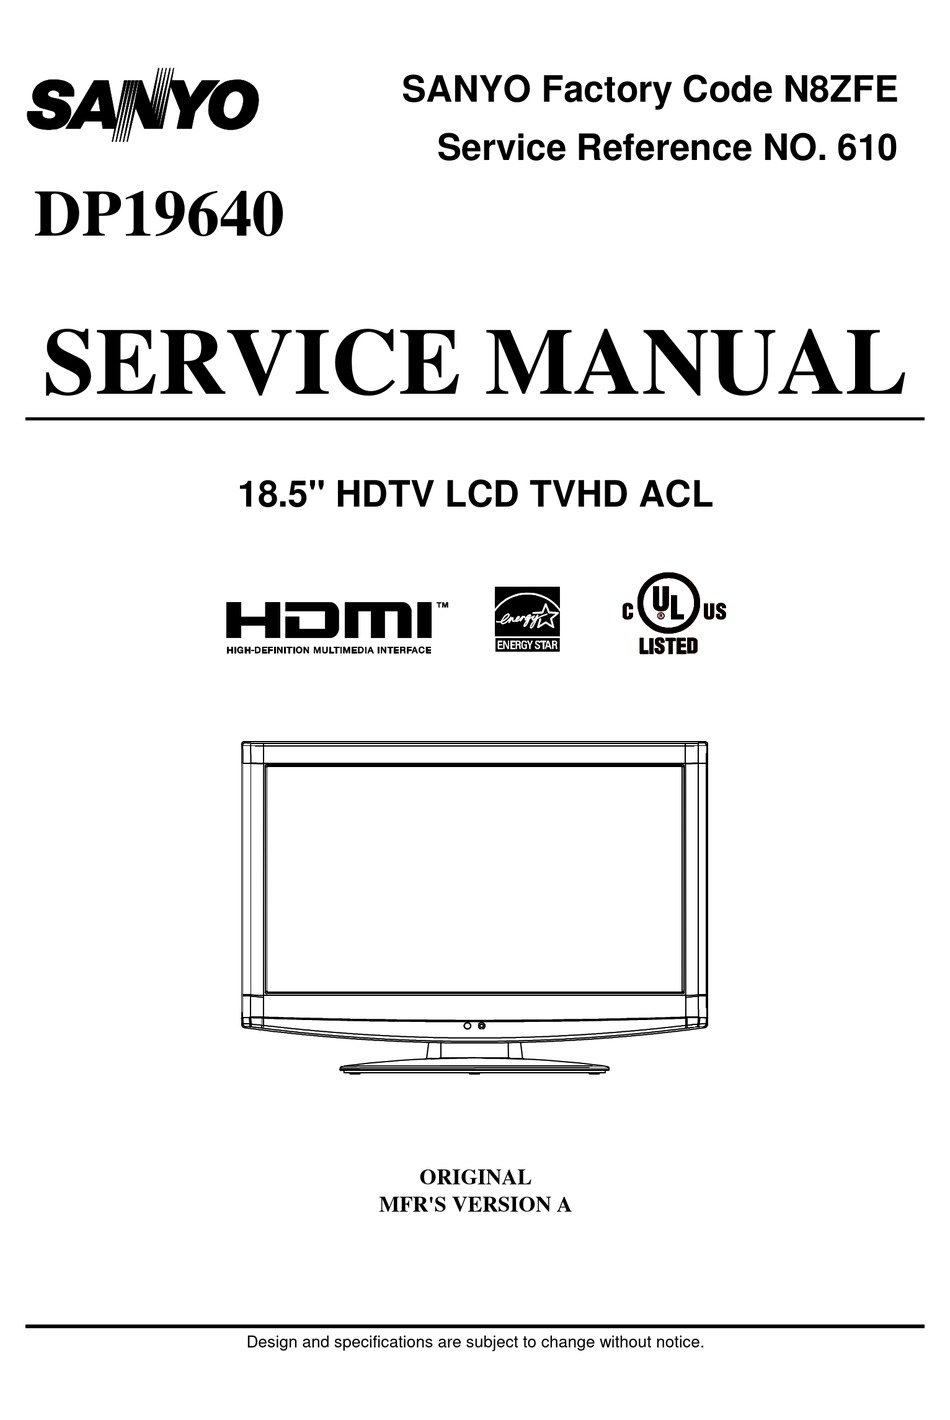 SANYO DP19640 SERVICE MANUAL Pdf Download | ManualsLib